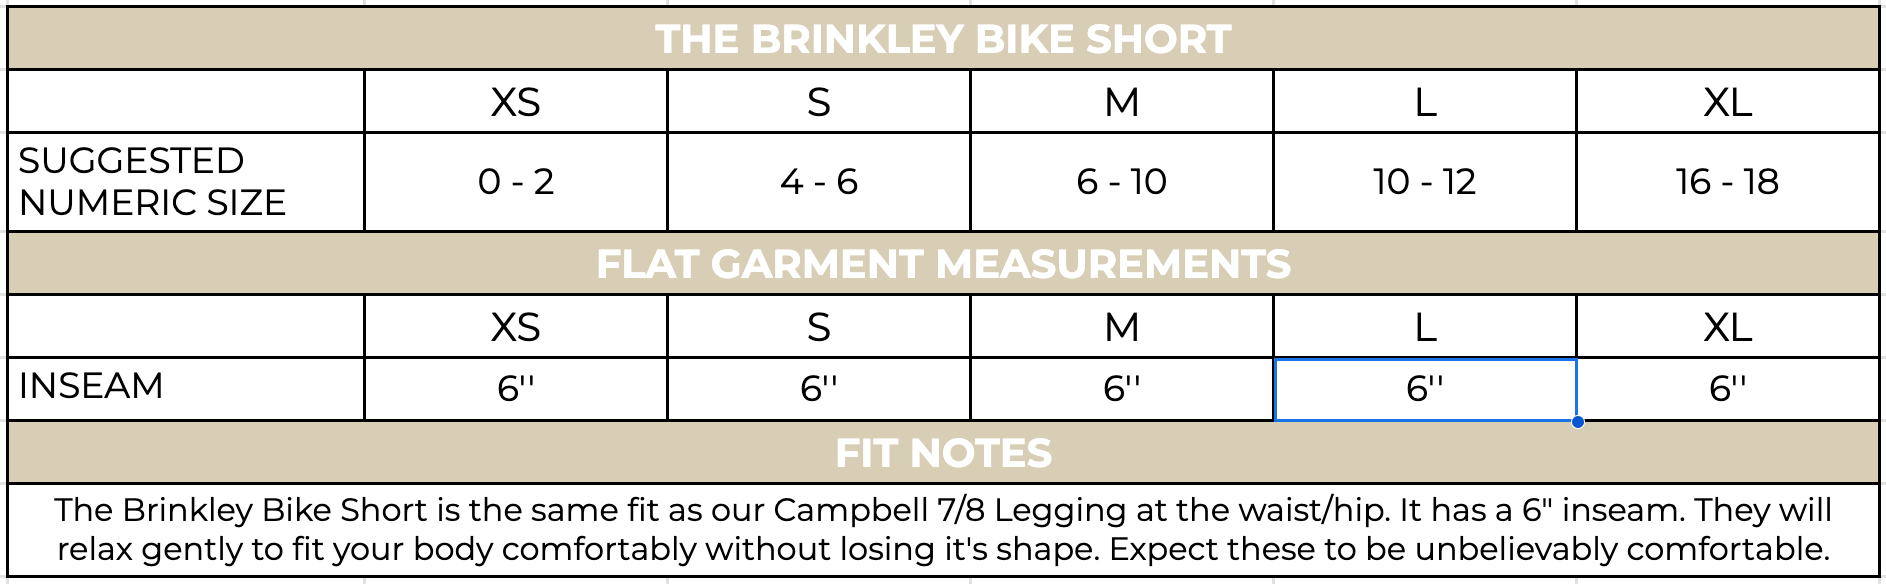 Brinkley Bike Shorts Size Chart